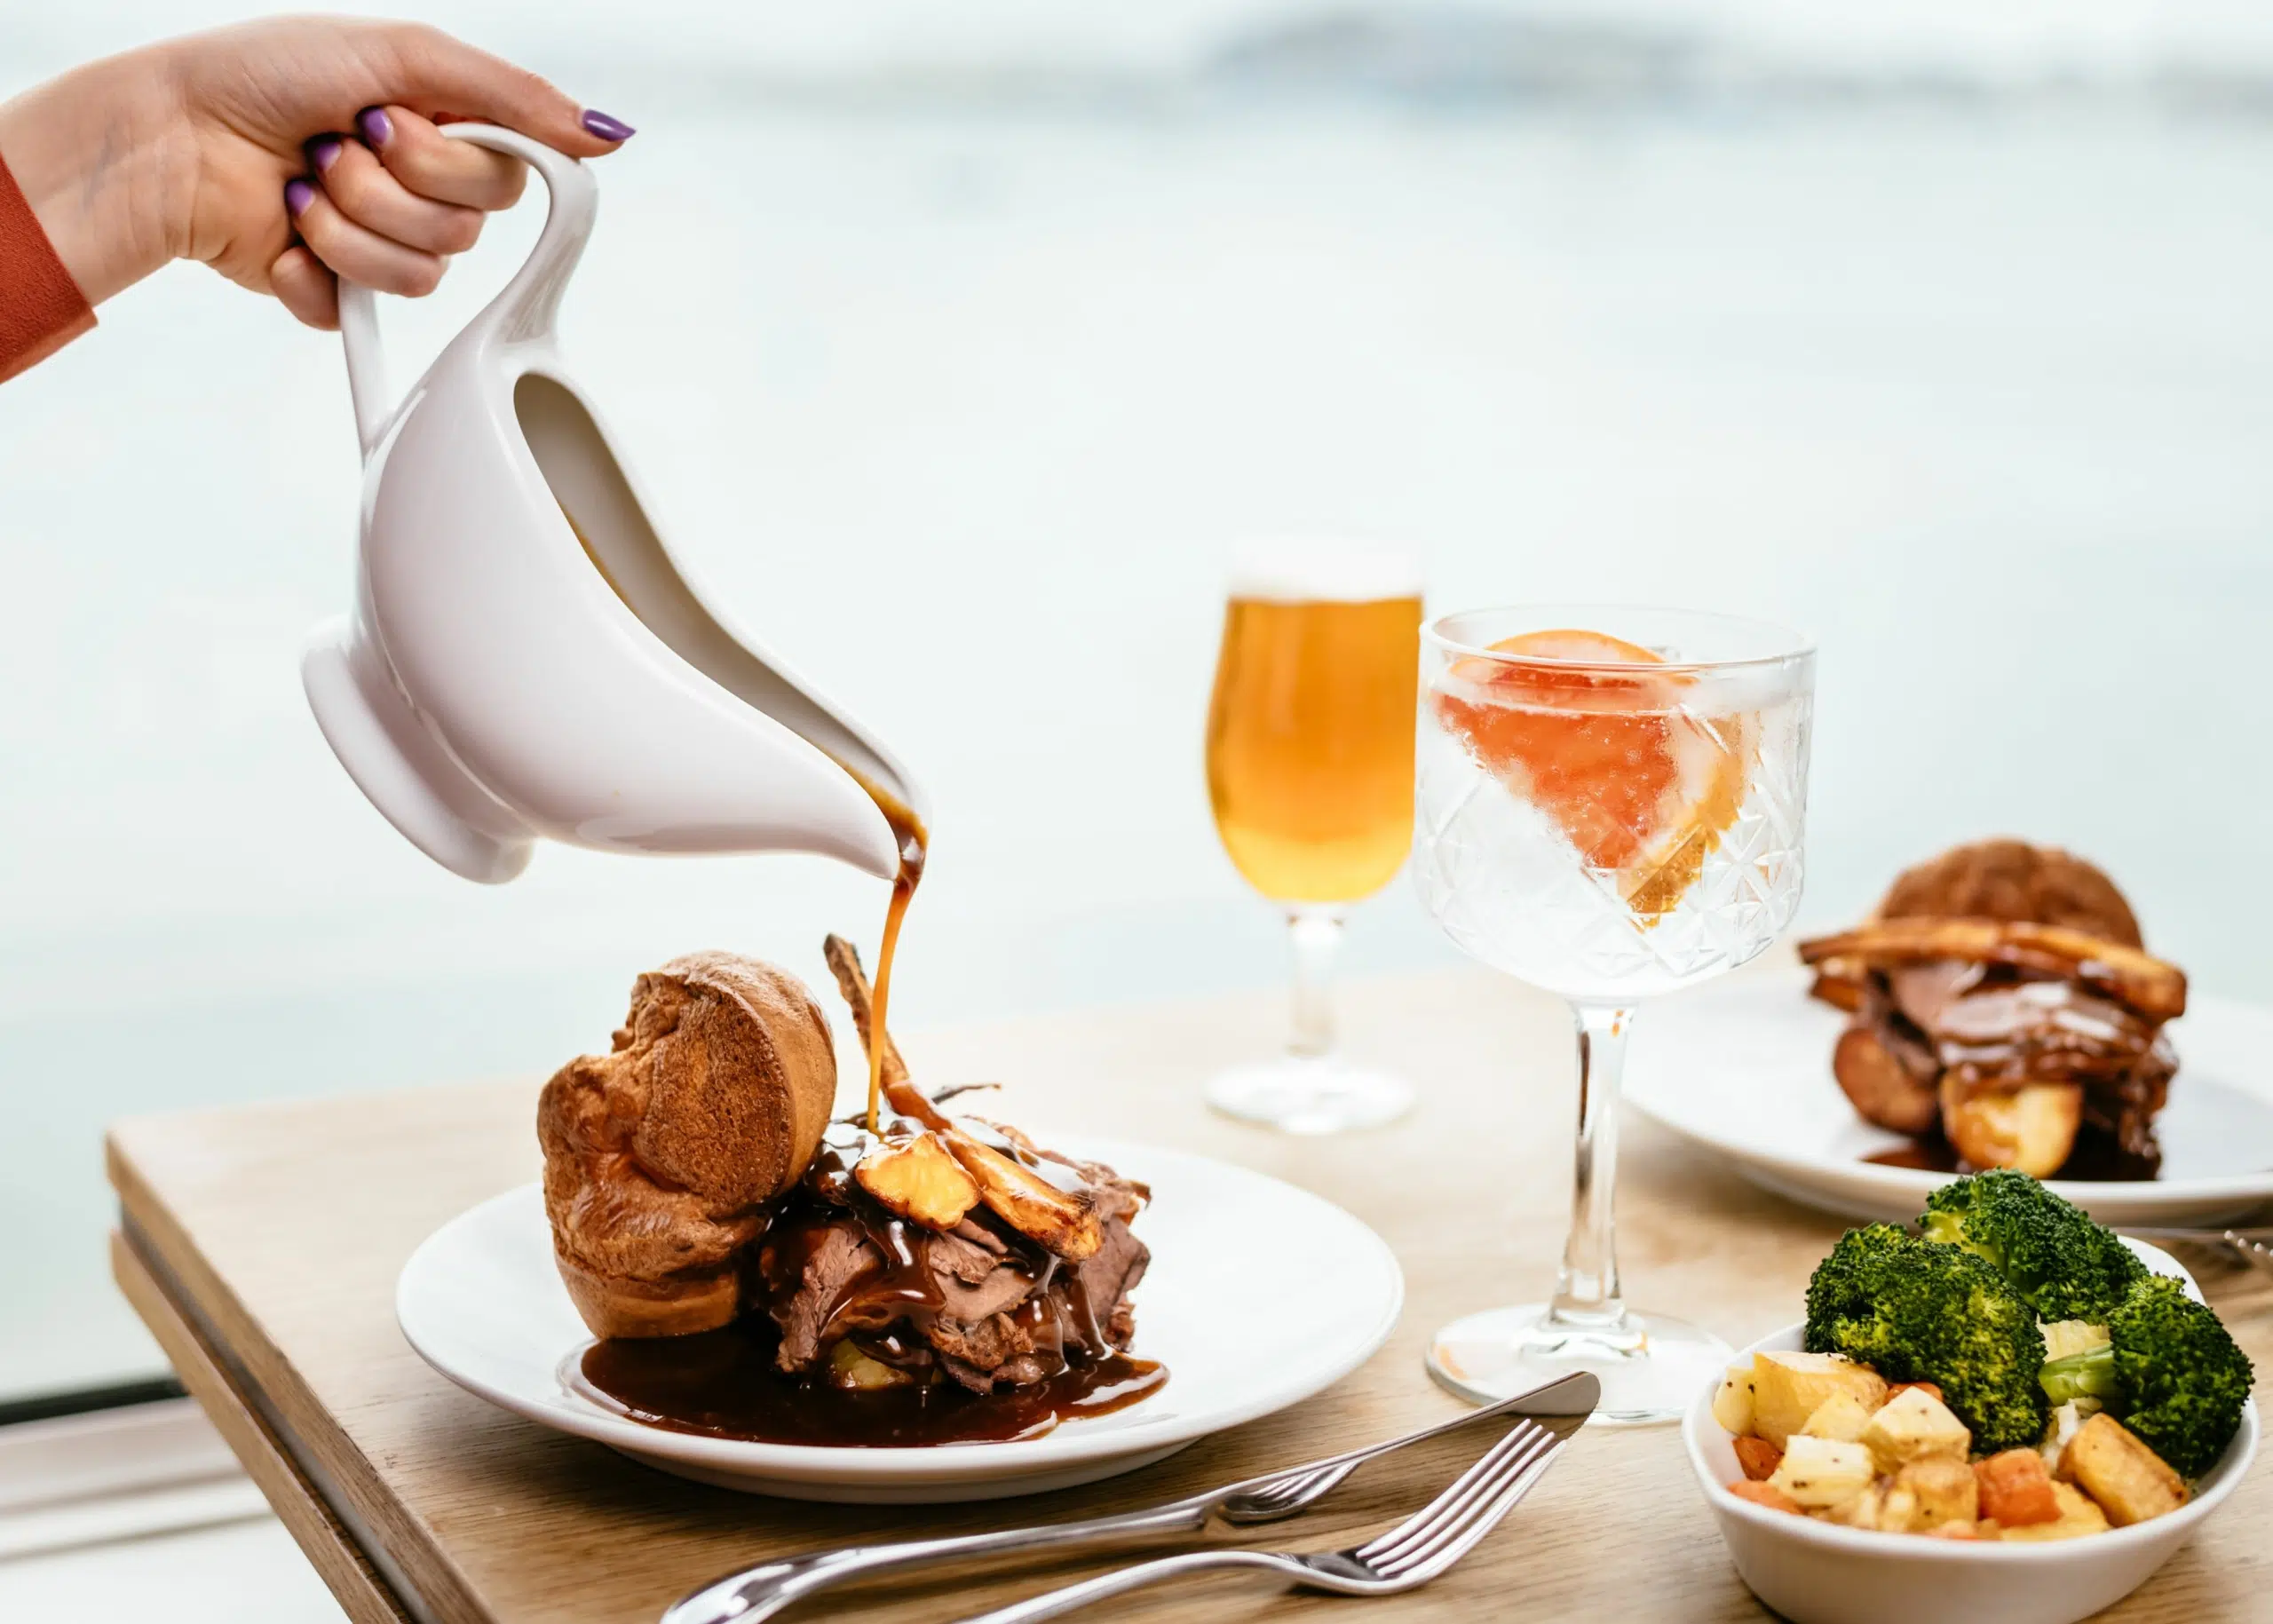 greenbank-hotel-offers-roast-dinner